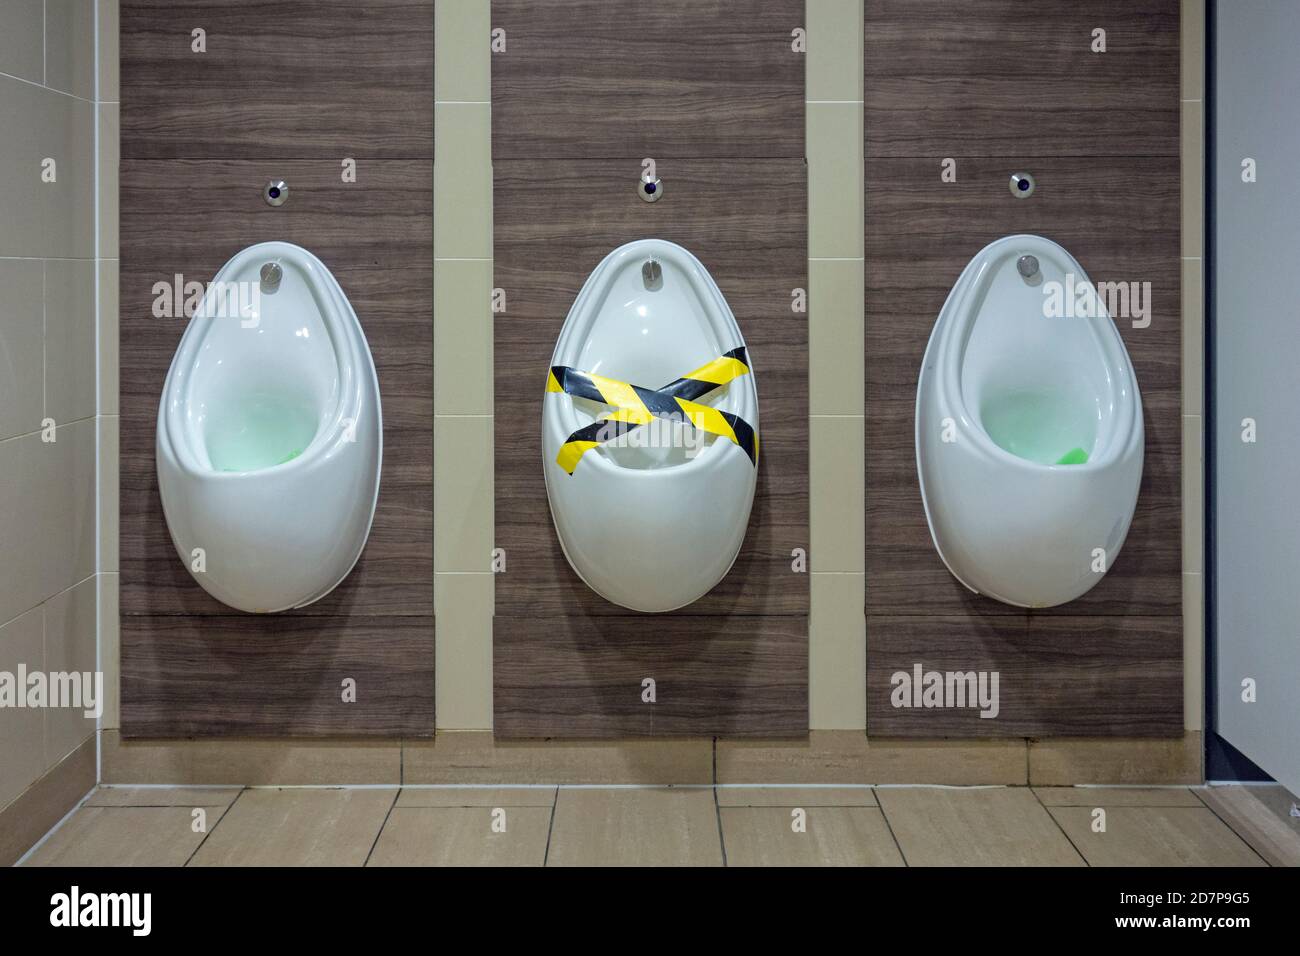 Gentlemen's urinals with one urinal taped off, Edinburgh Airport, Scotland Stock Photo